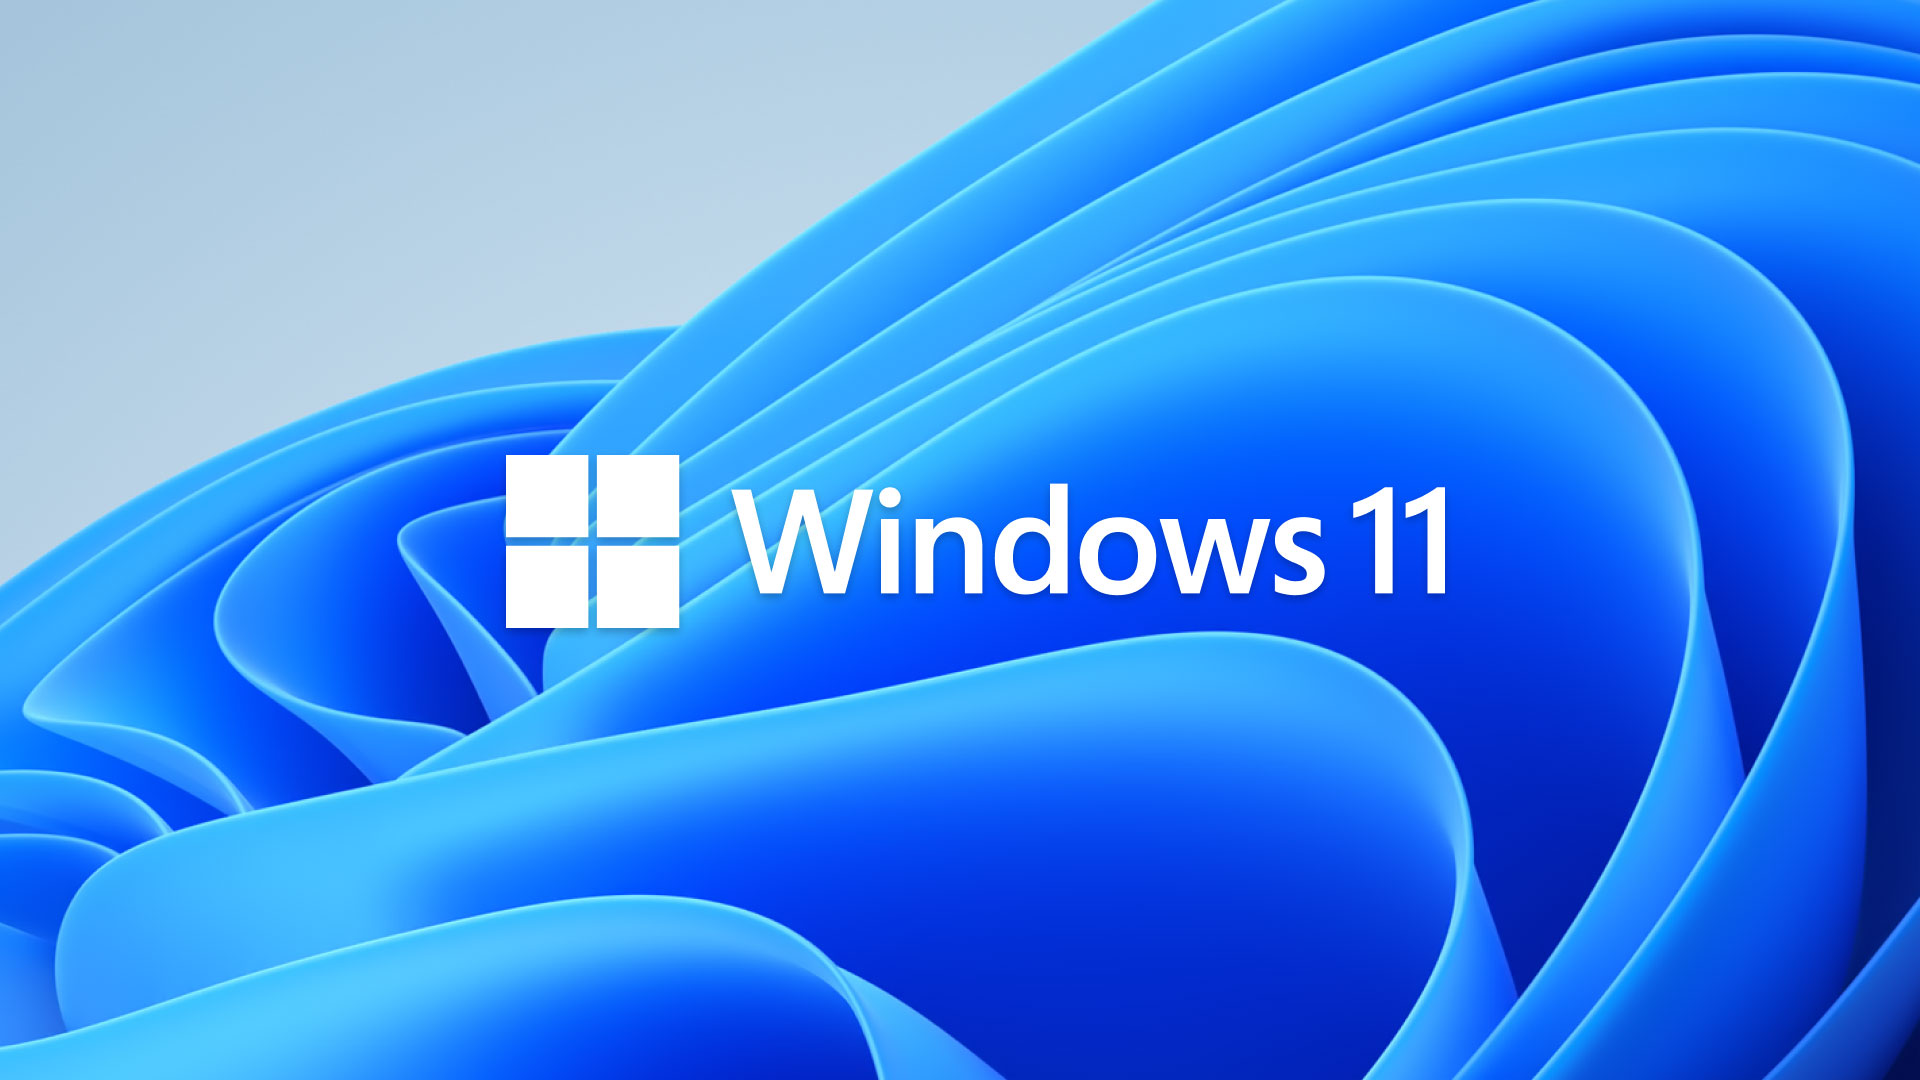 Her den nye Windows 11